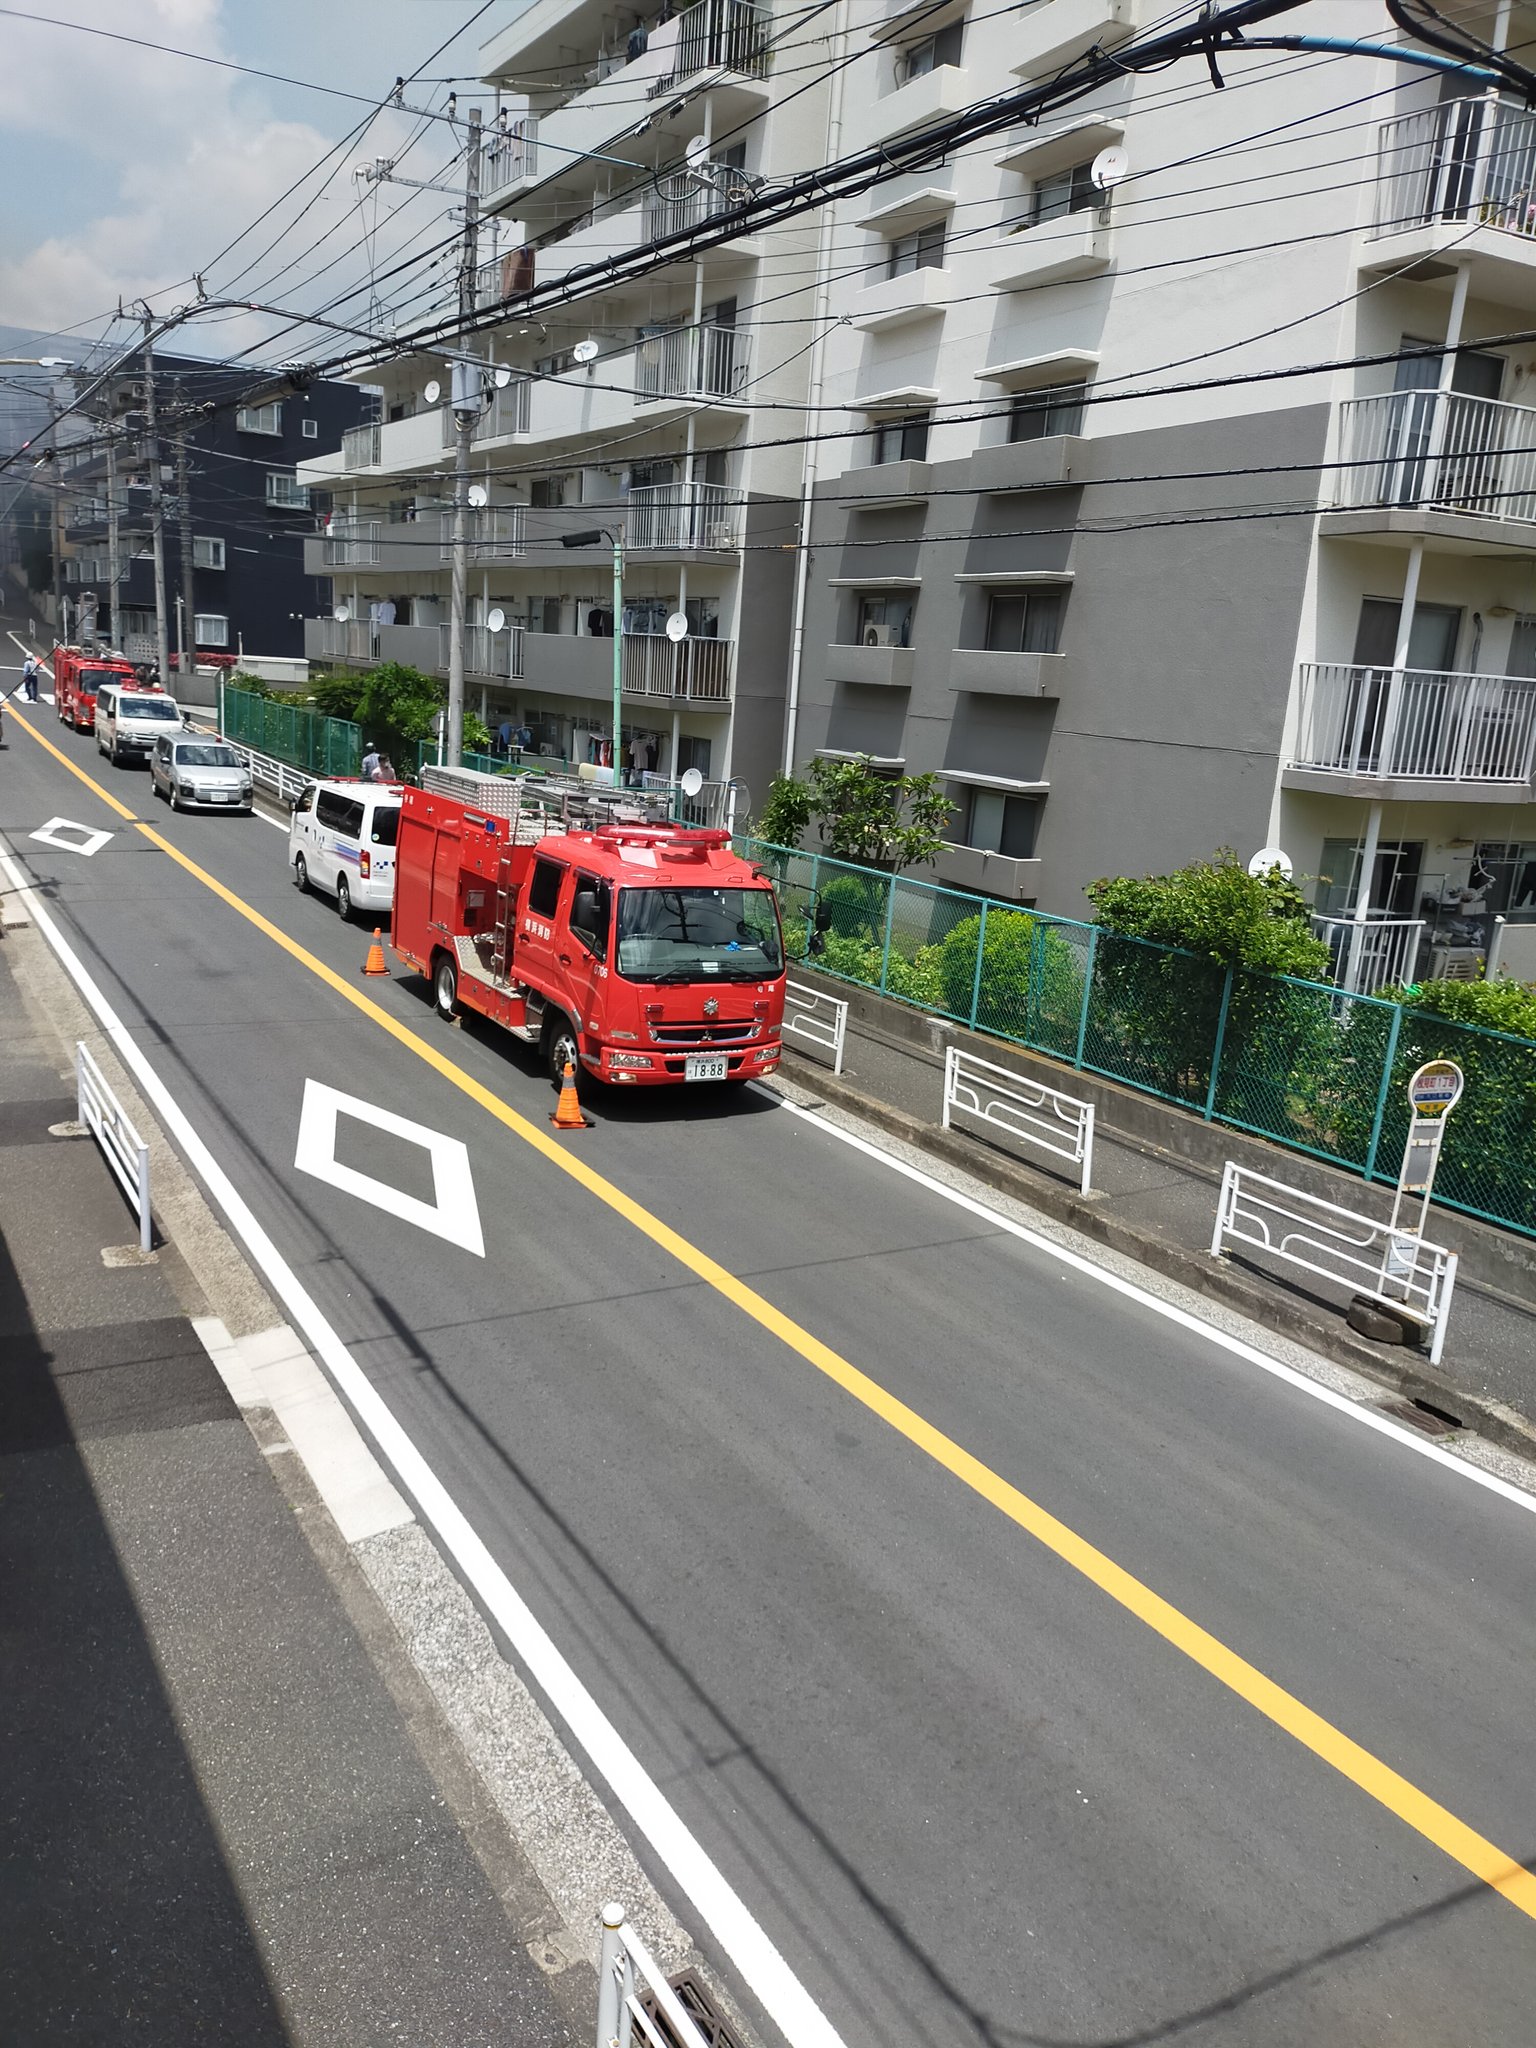 Yoshihiro Tsutsumi on Twitter: "自宅の裏付近で火事… https://t.co/DOnF2AZD0I